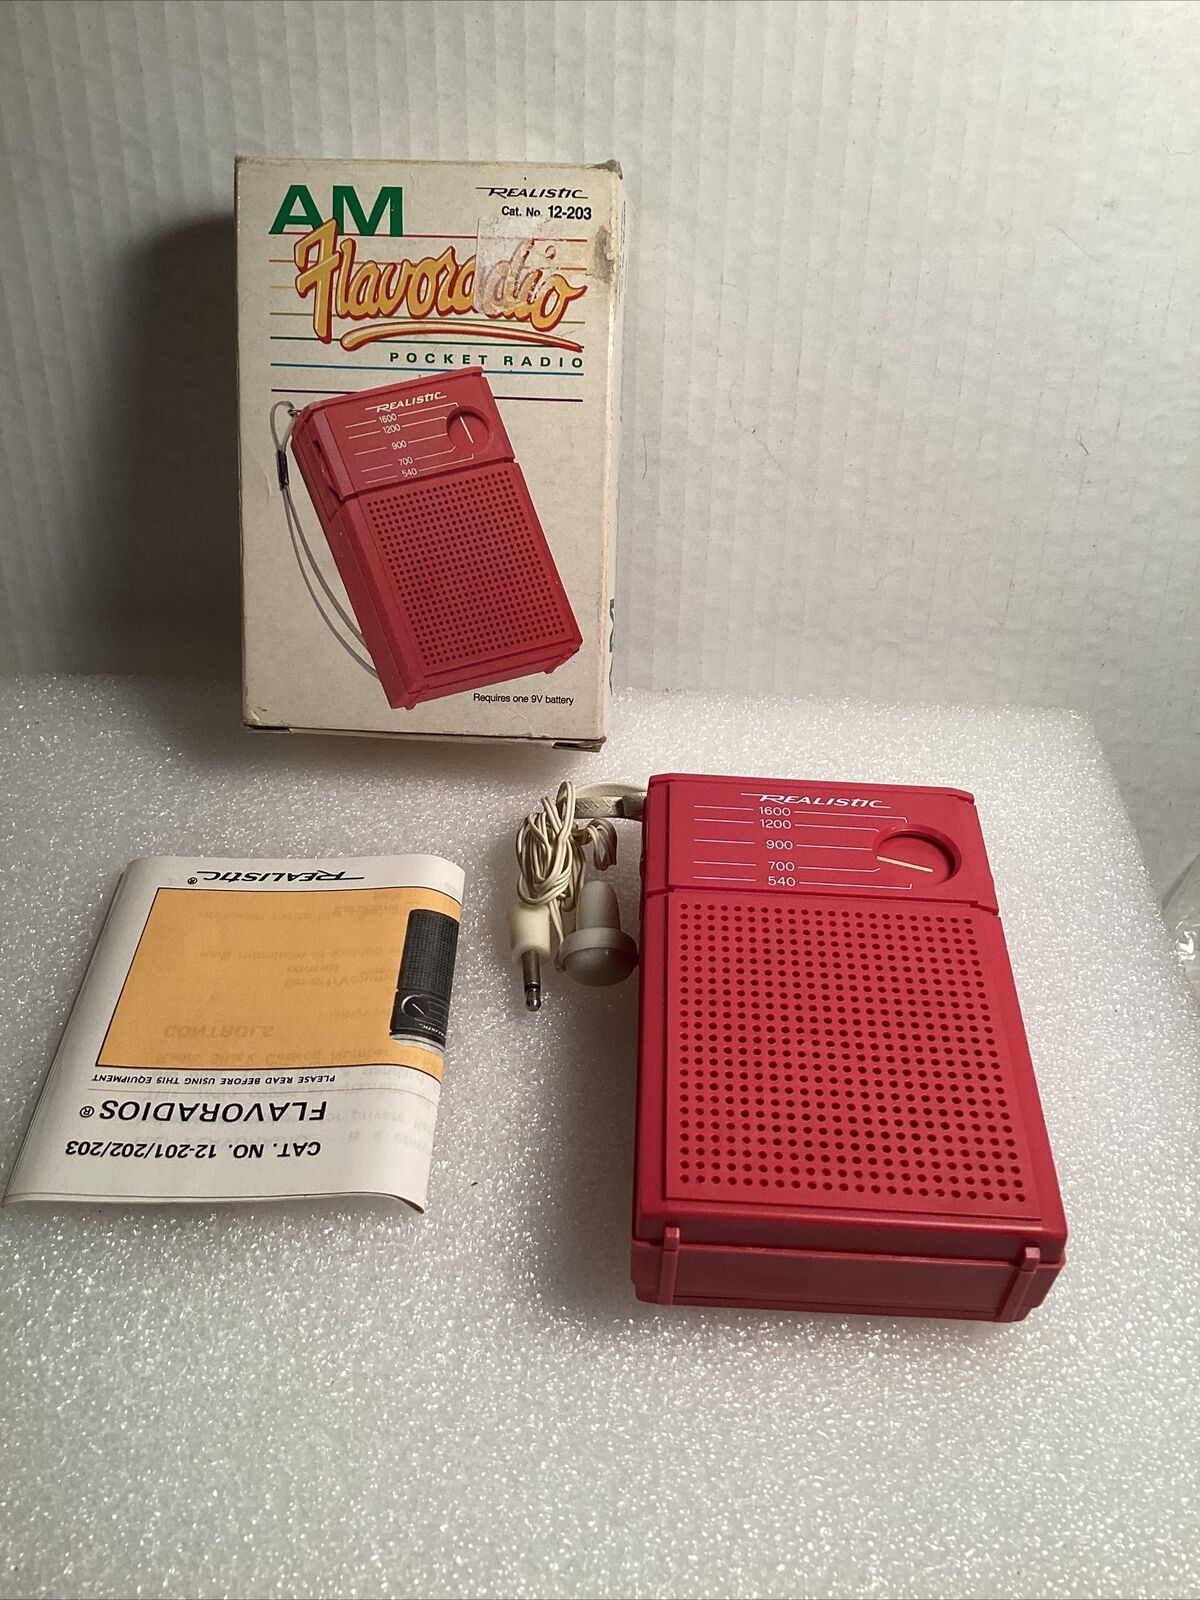 Radio Shack 12-203 AM Flavoradio Flavor Radio Strawberry New in Box NOS 1987